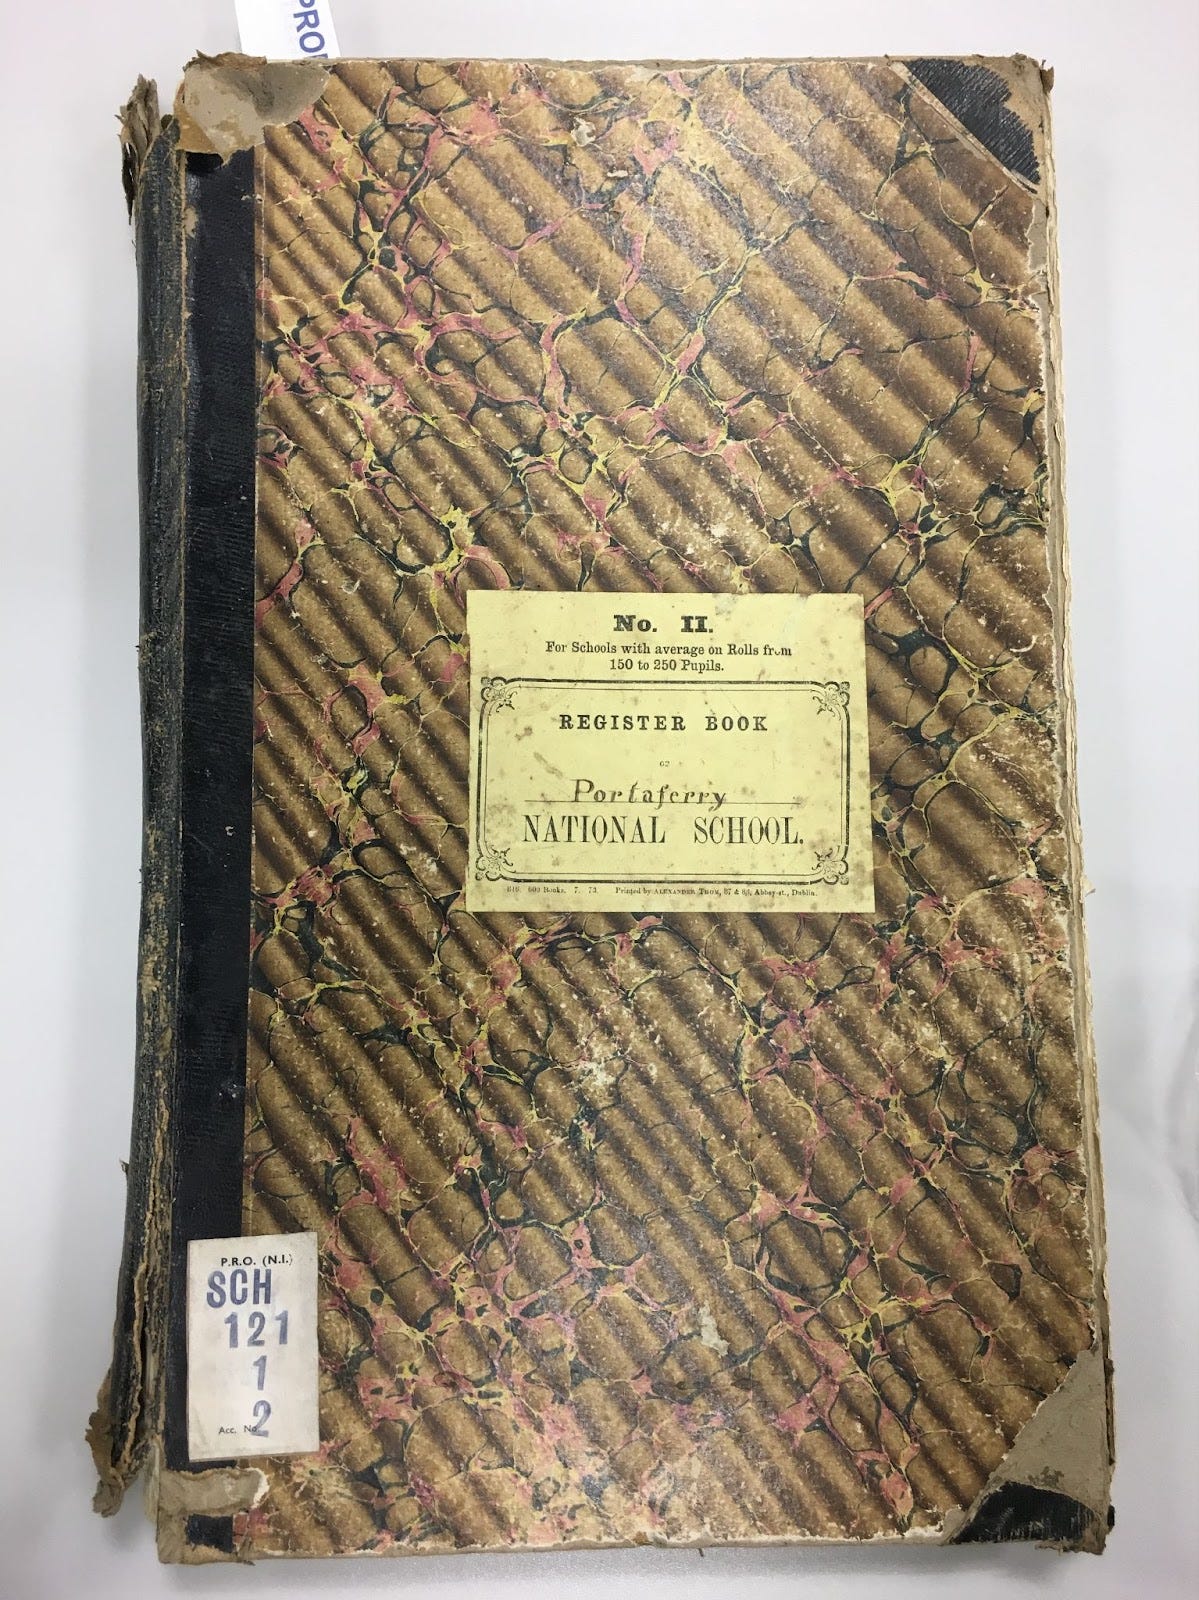 A worn school register book inscribed for Portaferry National School